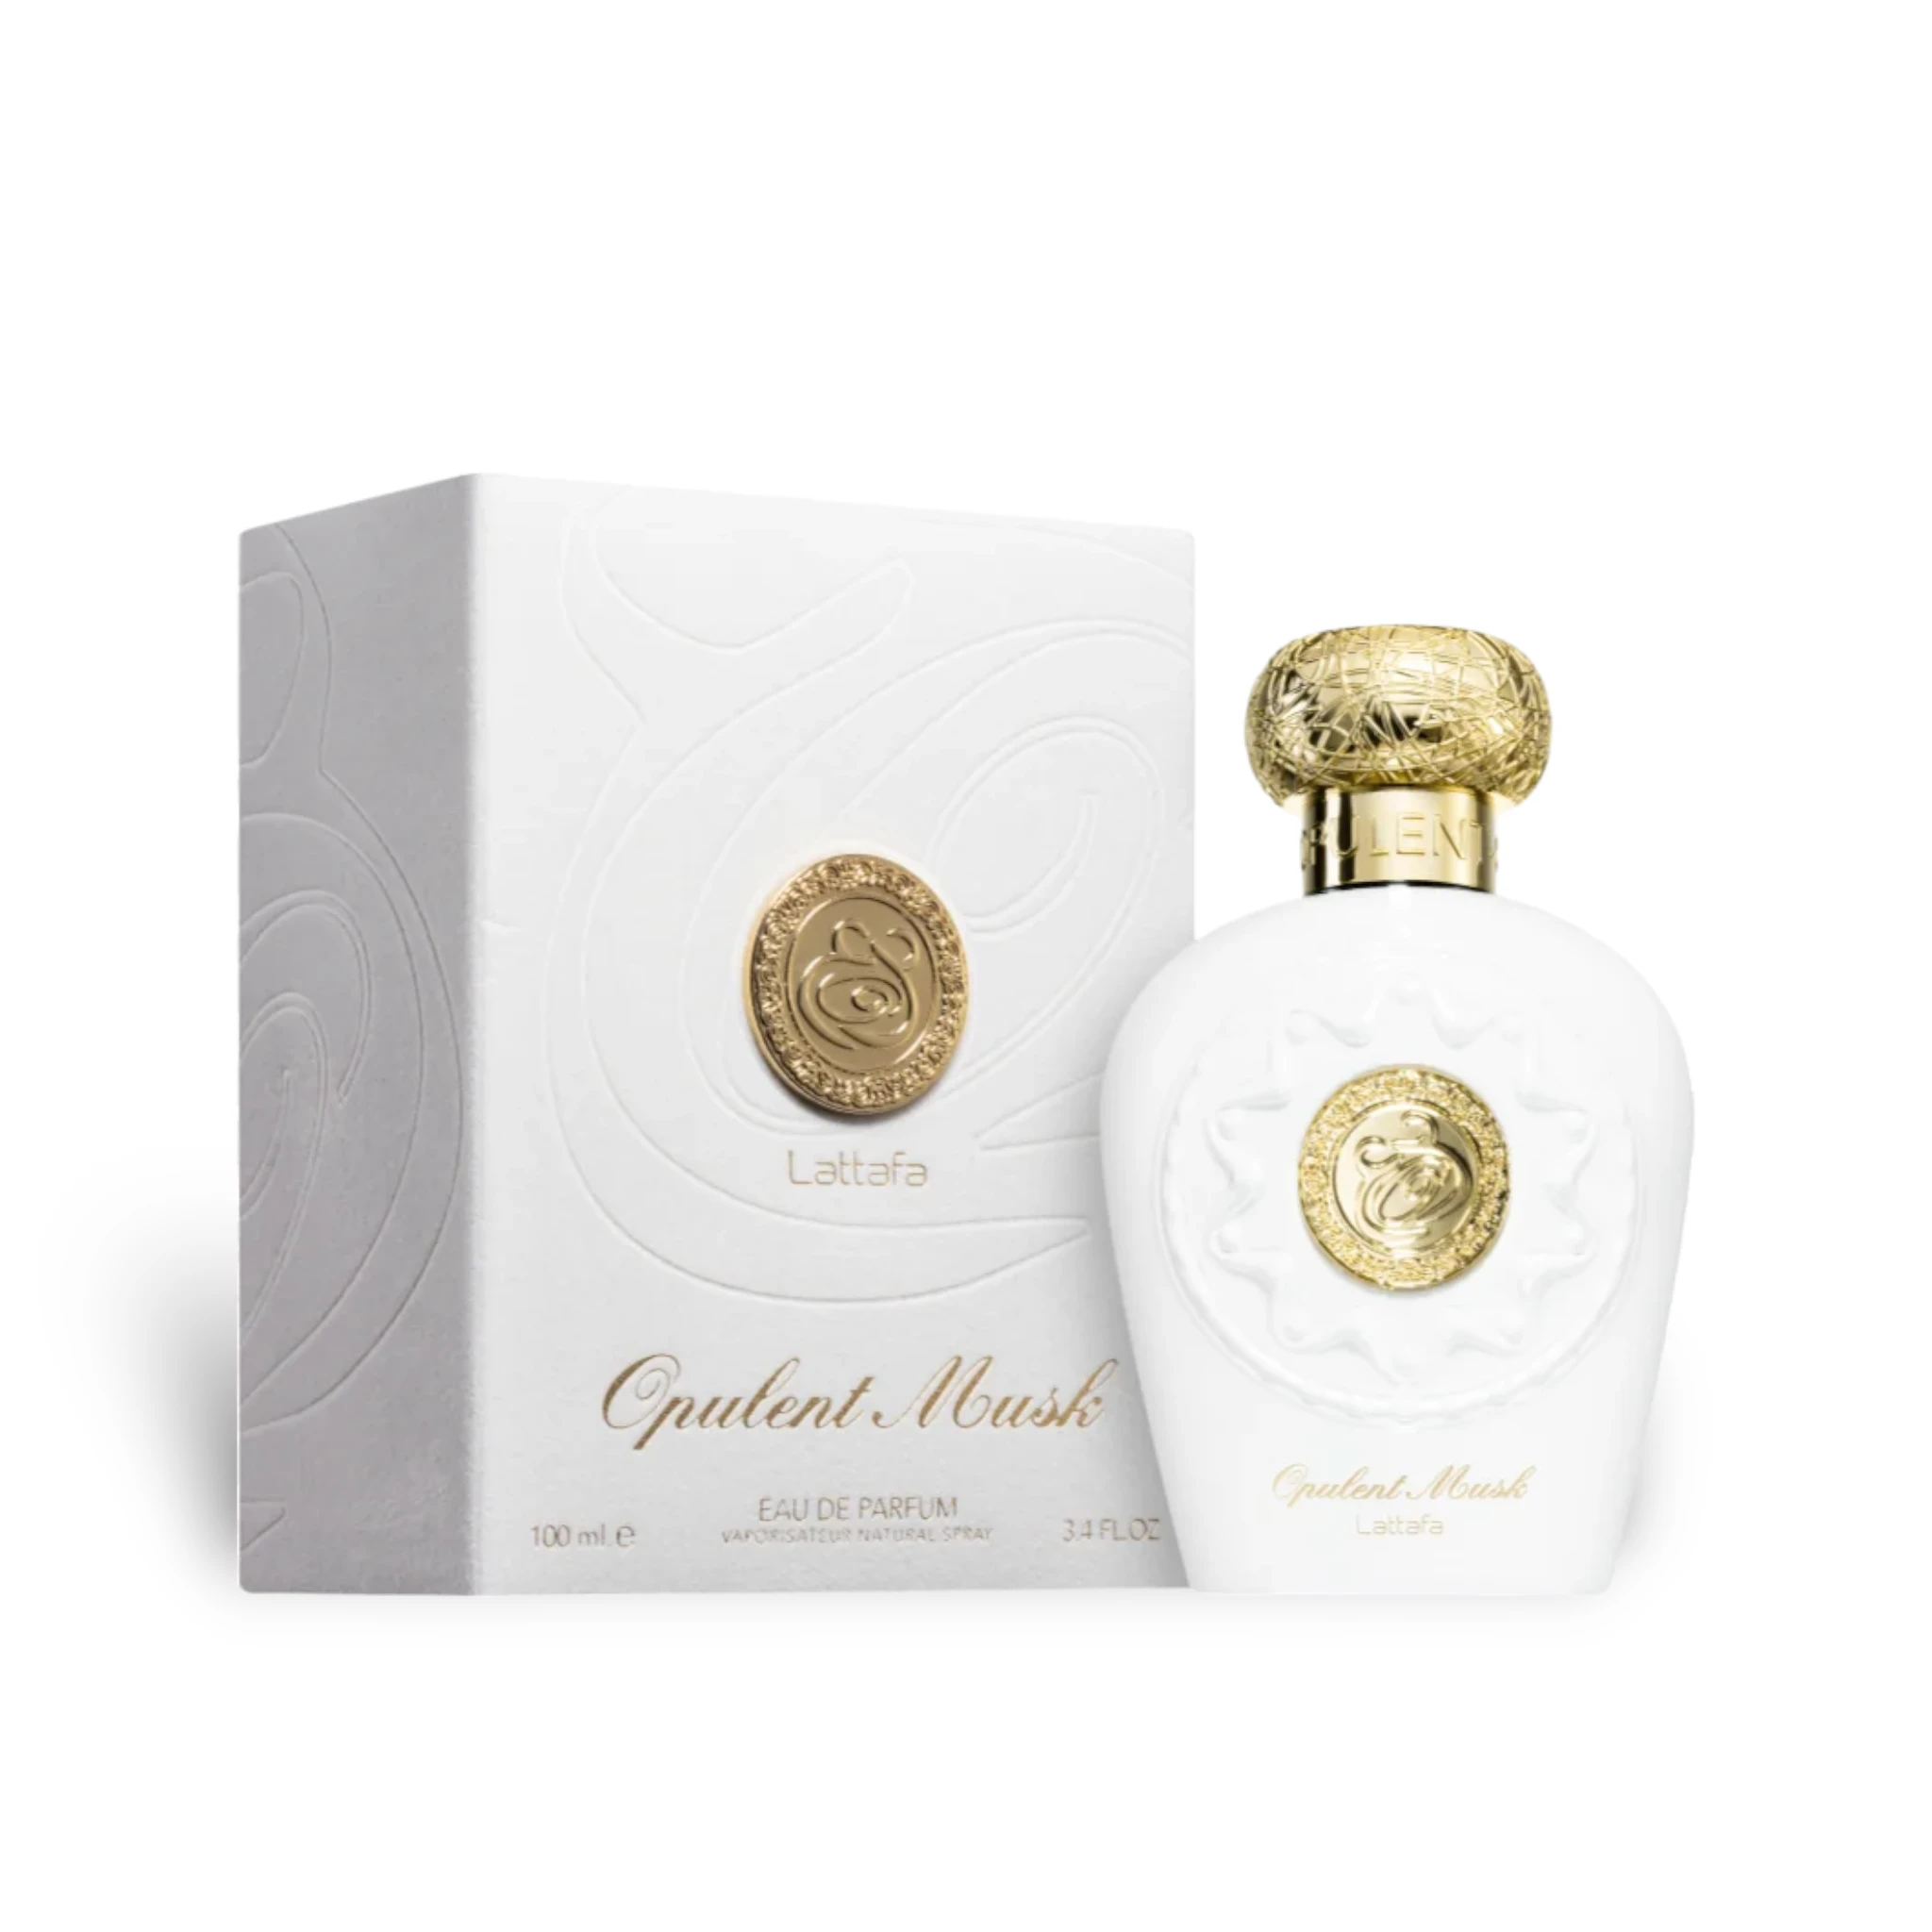 Opulent Musk Perfume Eau De Parfum 100Ml Edp By Lattafa